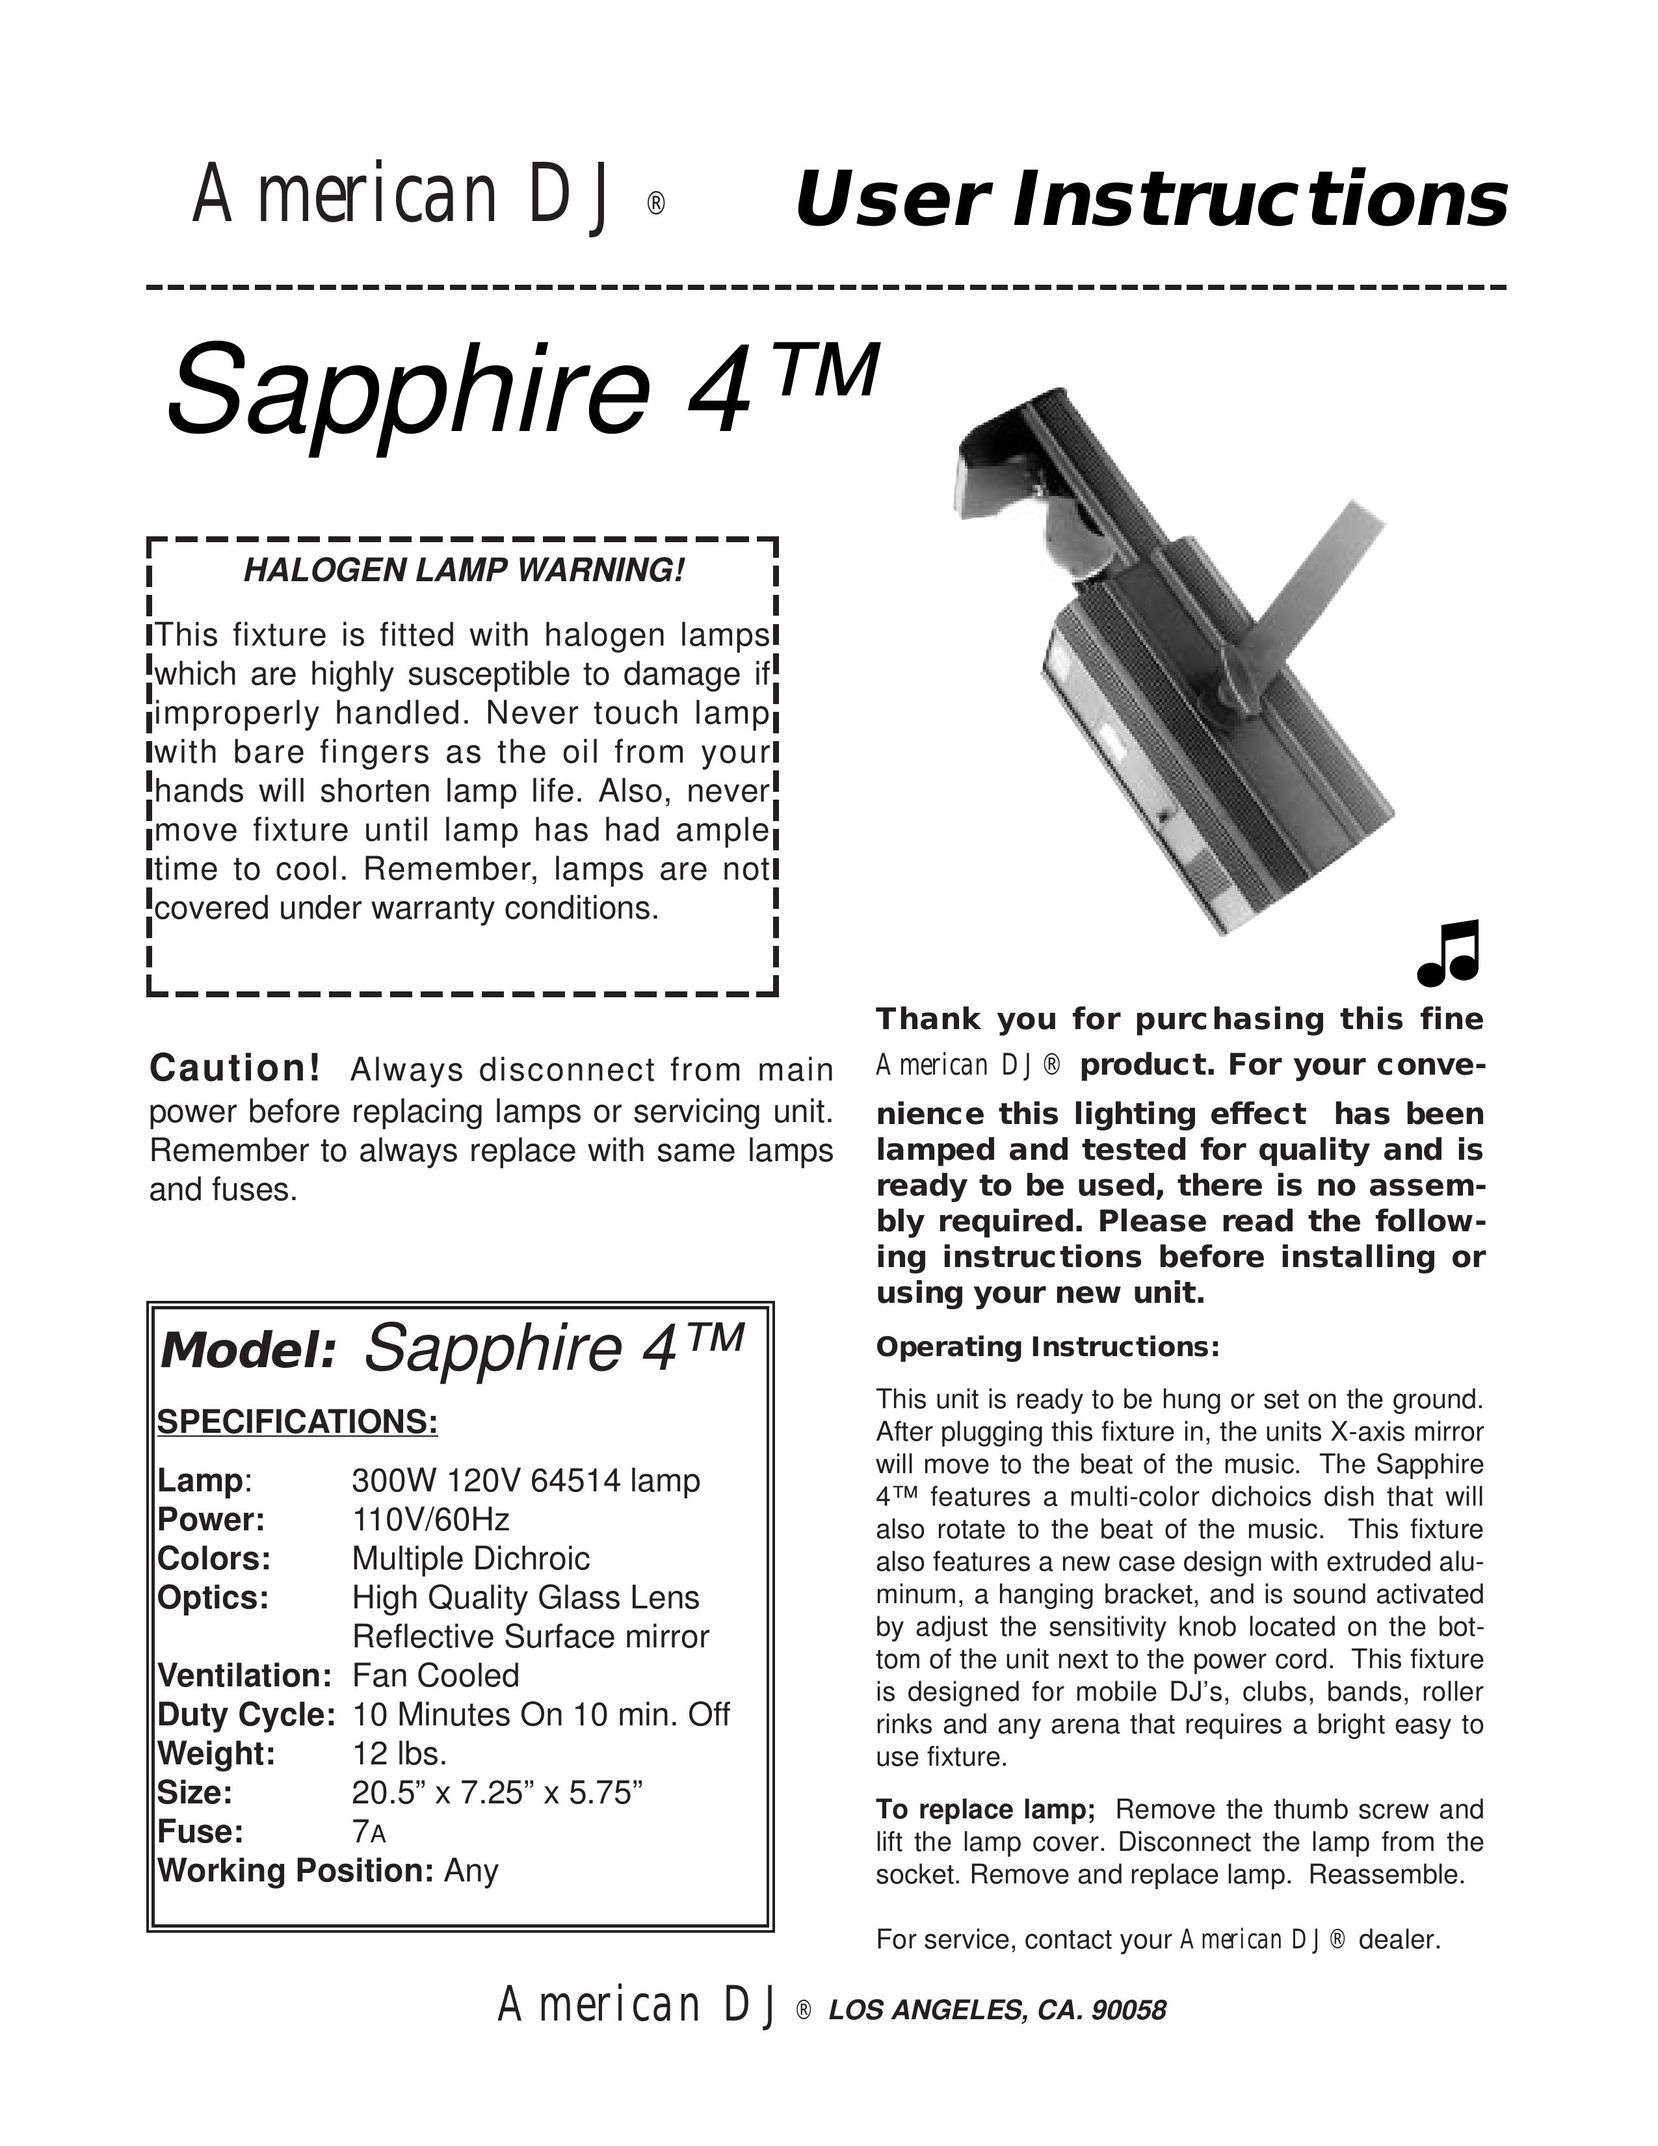 American DJ Sapphire 4 Indoor Furnishings User Manual